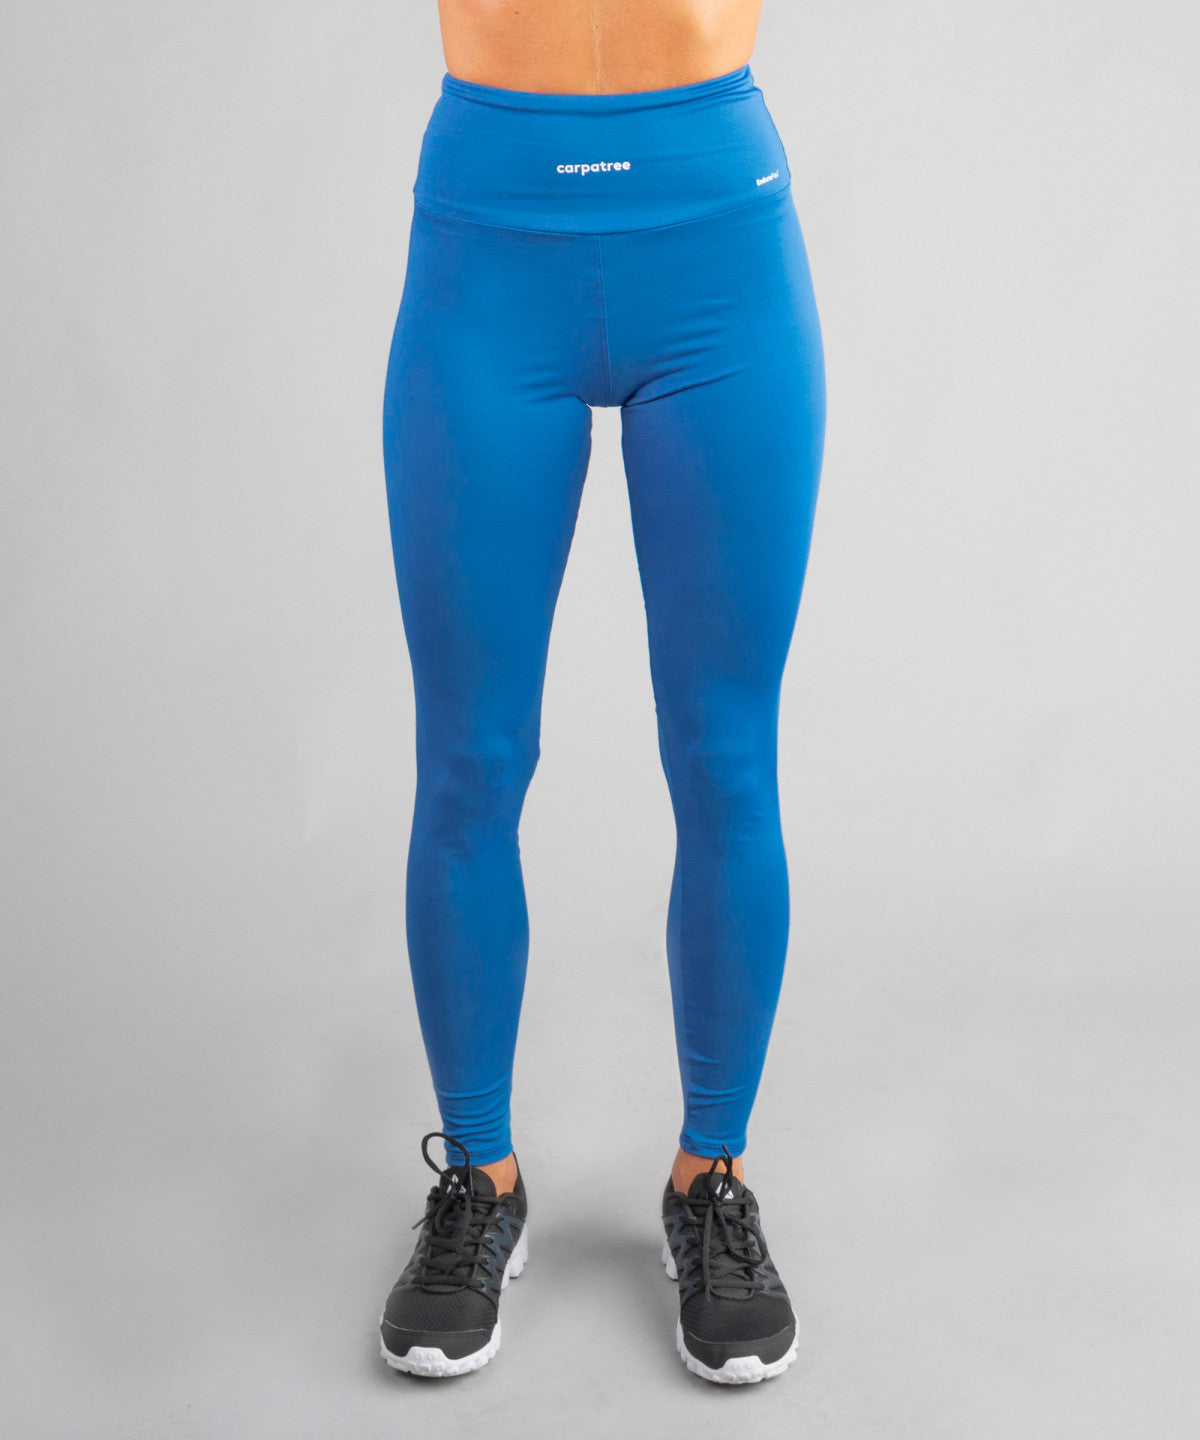 Carpatree High Waist Leggings - cobalt blue high waisted sports leggings, perfect activewear